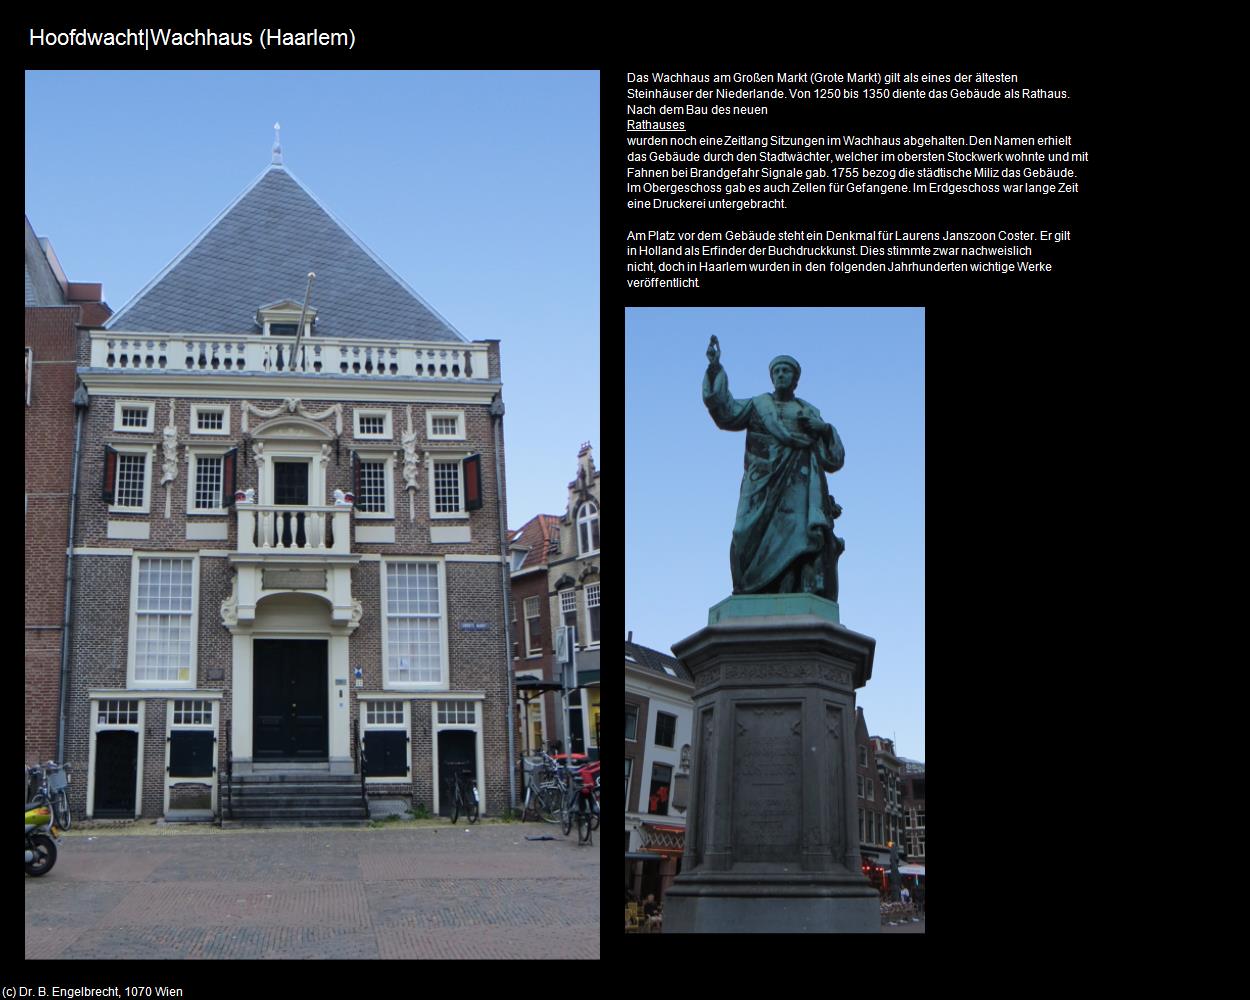 Hoofdwacht|Wachhaus (Haarlem) in Kulturatlas-NIEDERLANDE(c)B.Engelbrecht